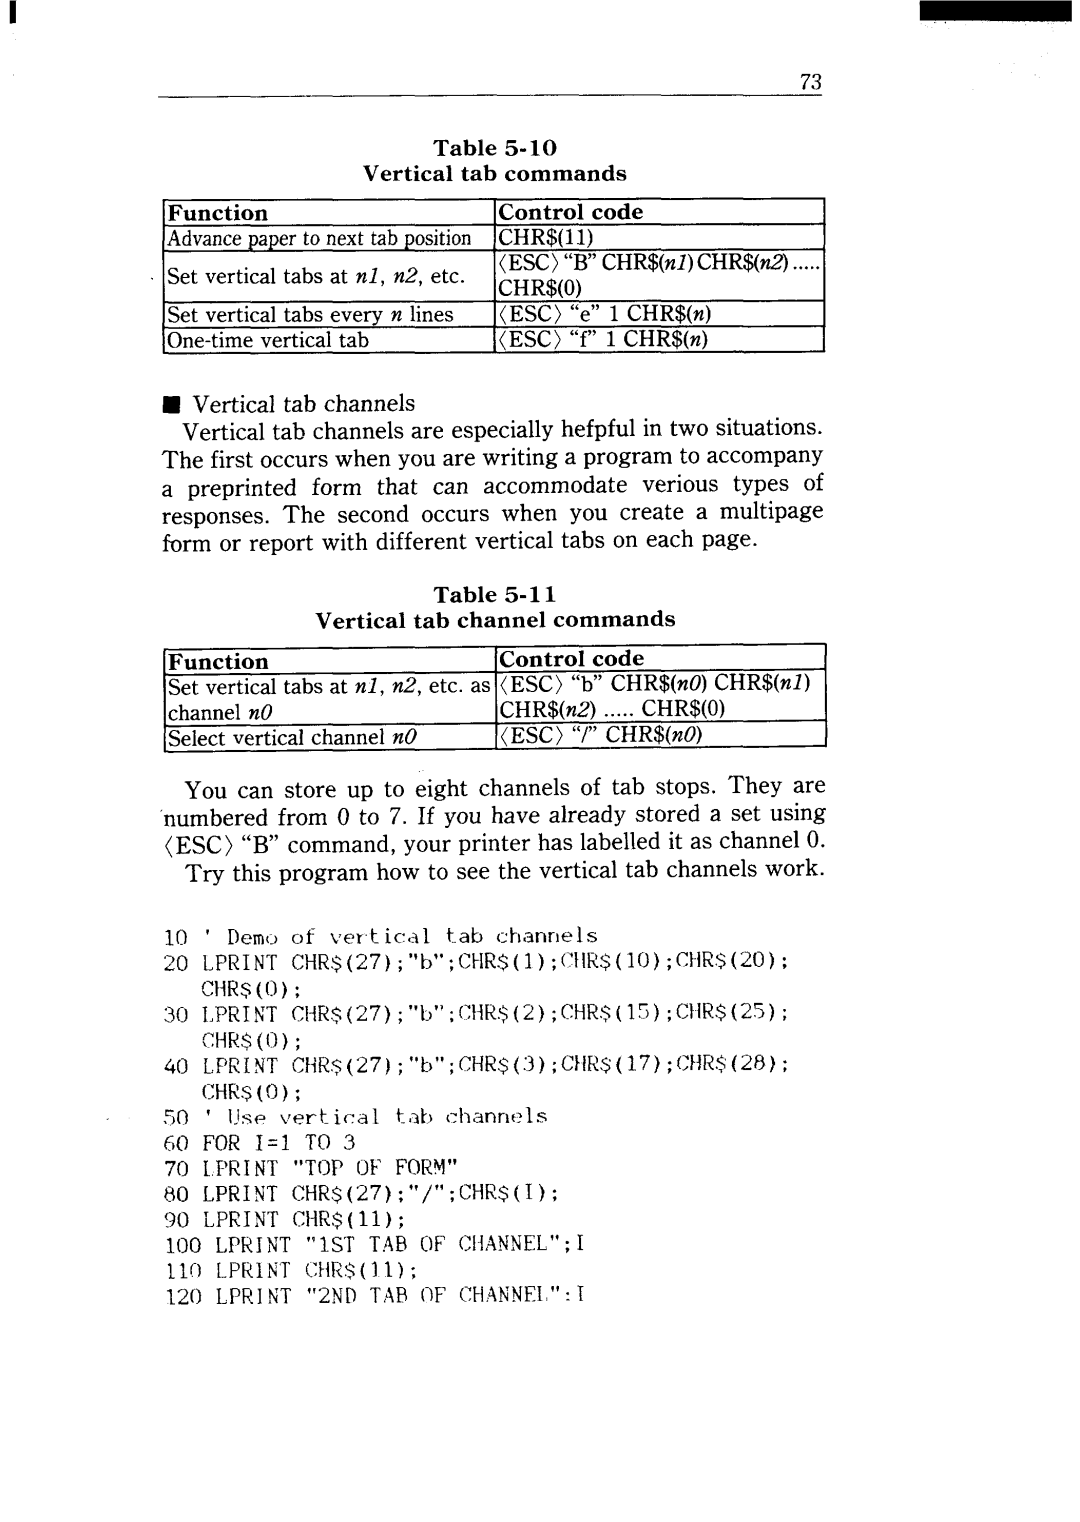 Star Micronics NX-15 user manual ESC “B”CHR$nlCHR$n2 